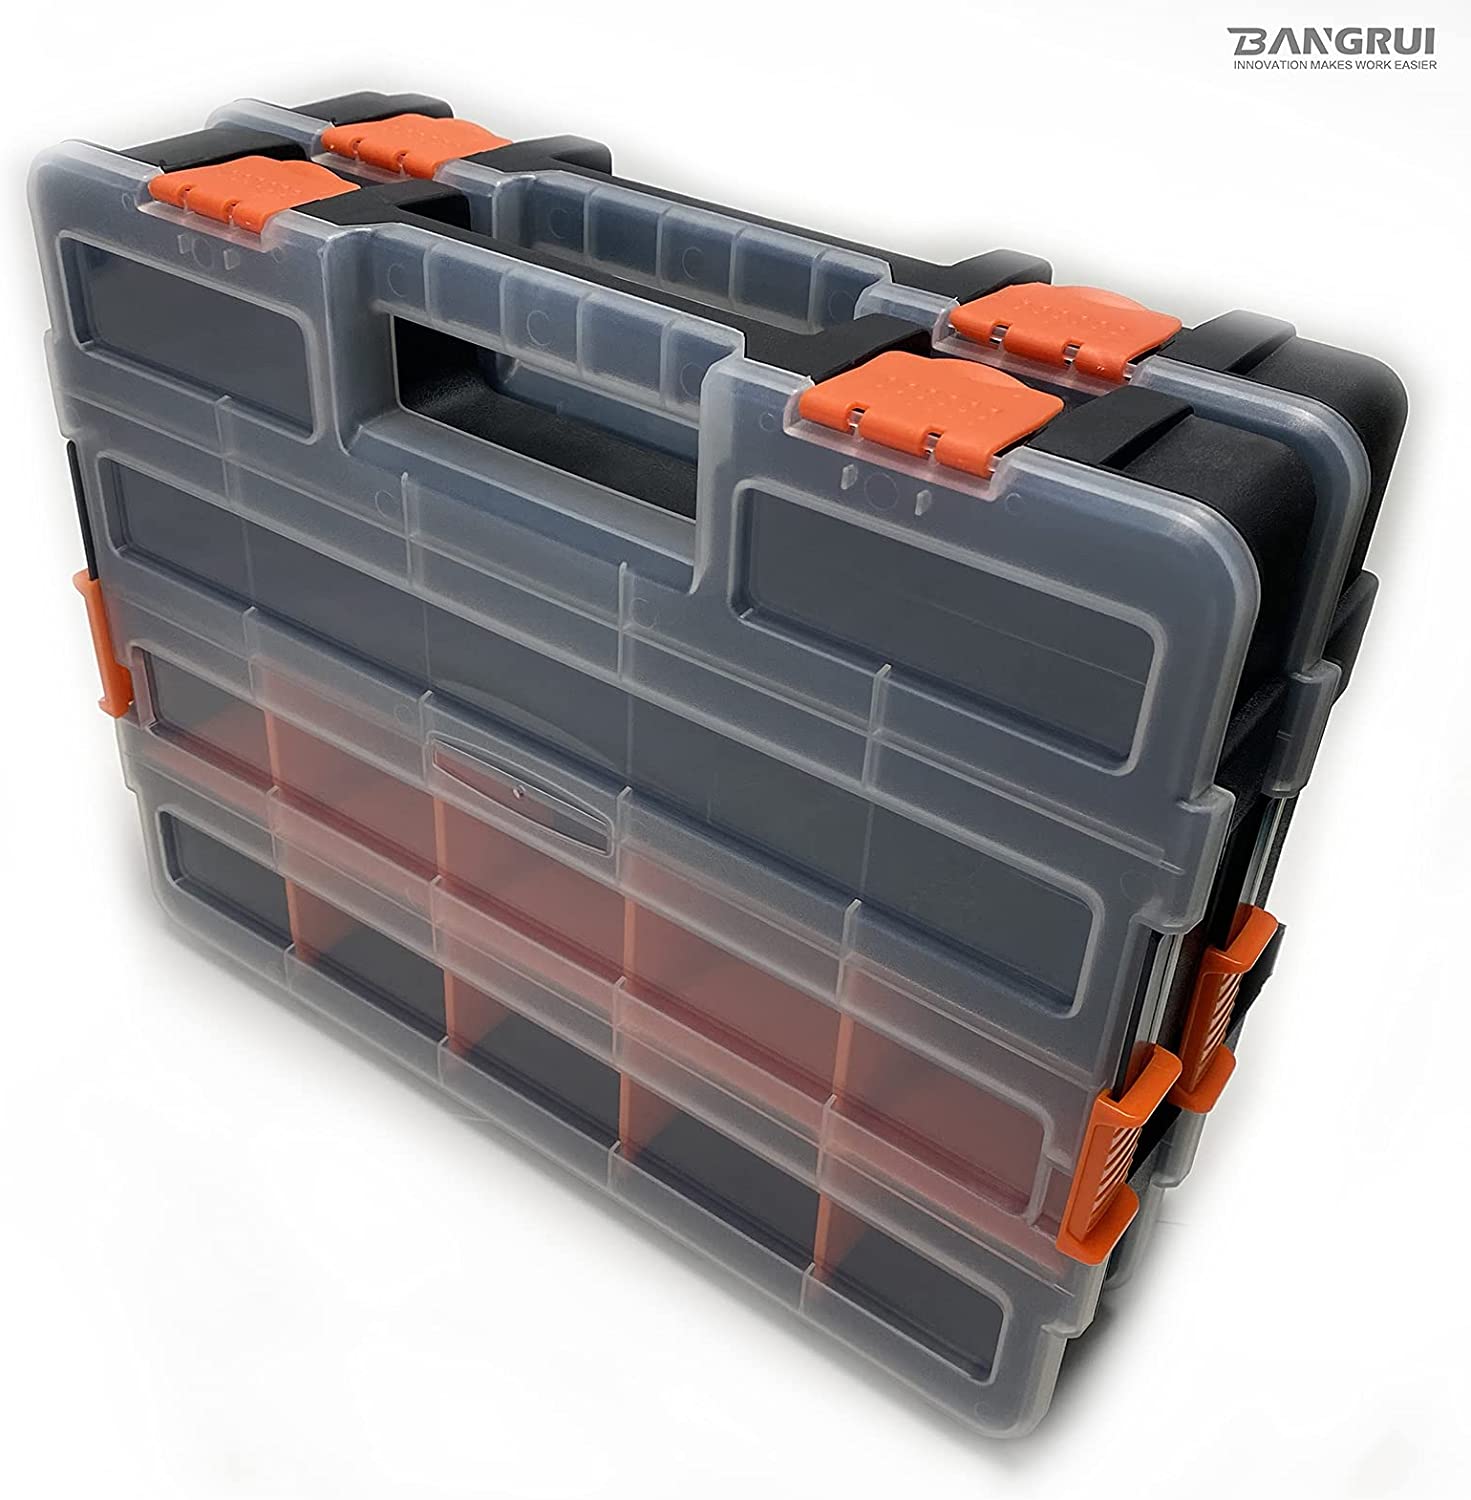 Bangrui BT2035 14.5'' Double size with compartments HARDWARE STORAGE B –  Bangrui Tools